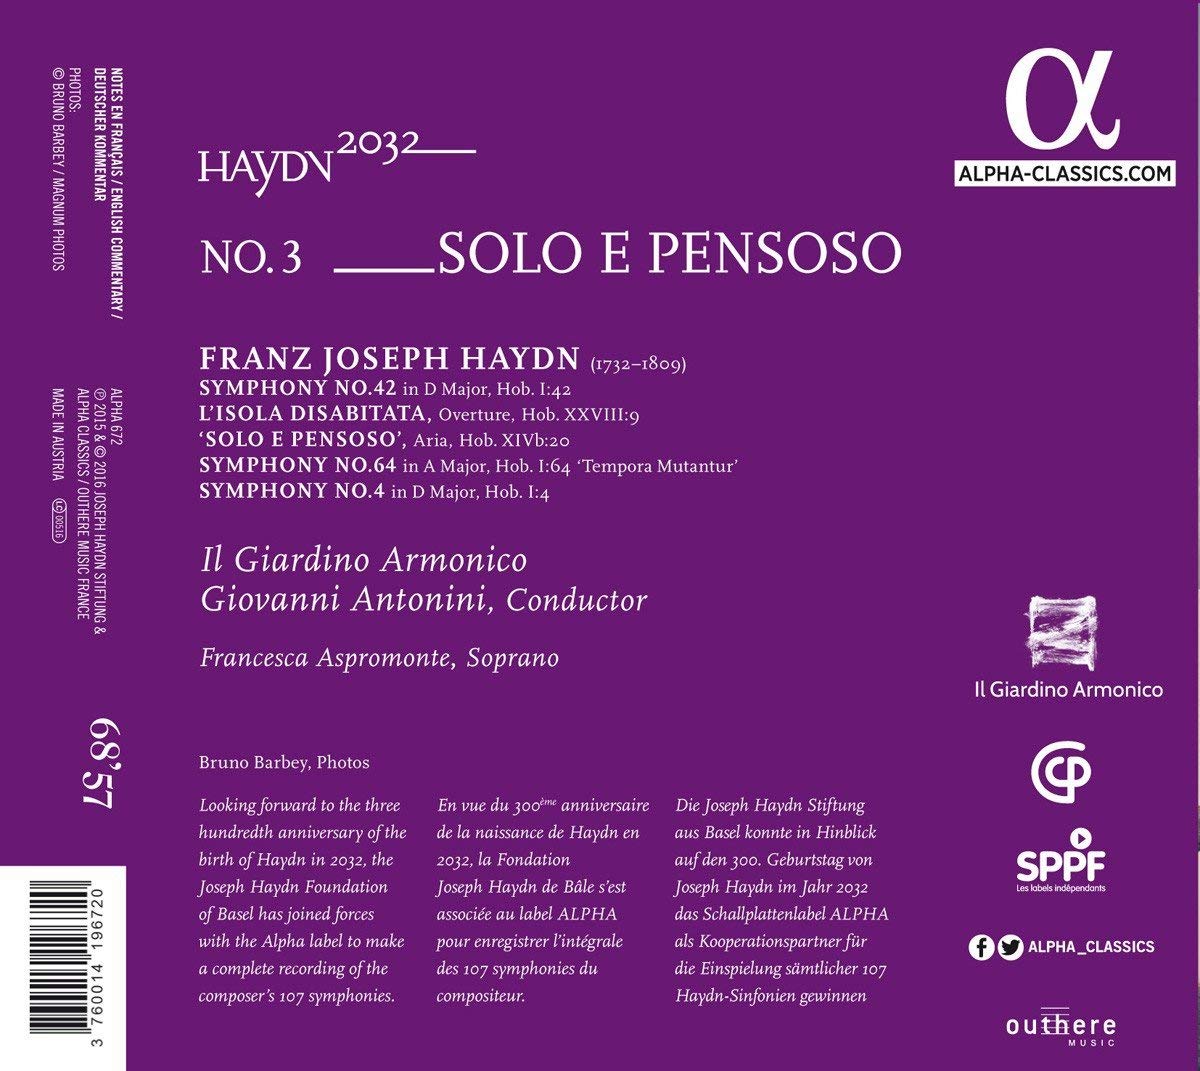 Haydn 2032 vol. 3 - Solo e Pensoso, Symphonies Nos. 4; 42; 64; Overture L’Isola Disabitata - slide-1